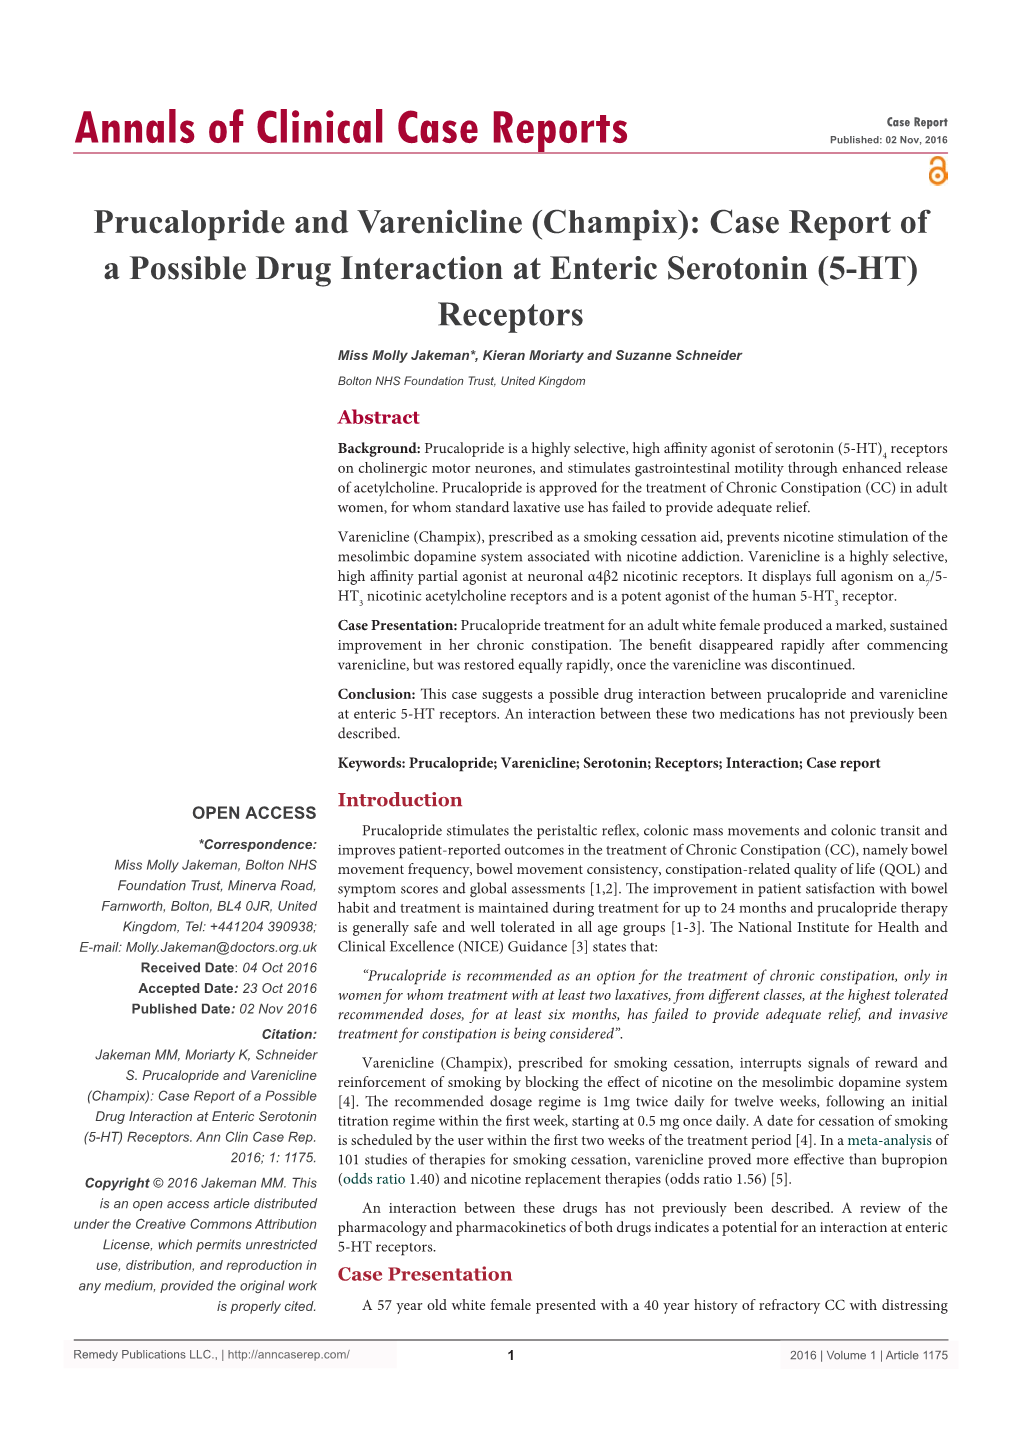 Champix): Case Report of a Possible Drug Interaction at Enteric Serotonin (5-HT) Receptors